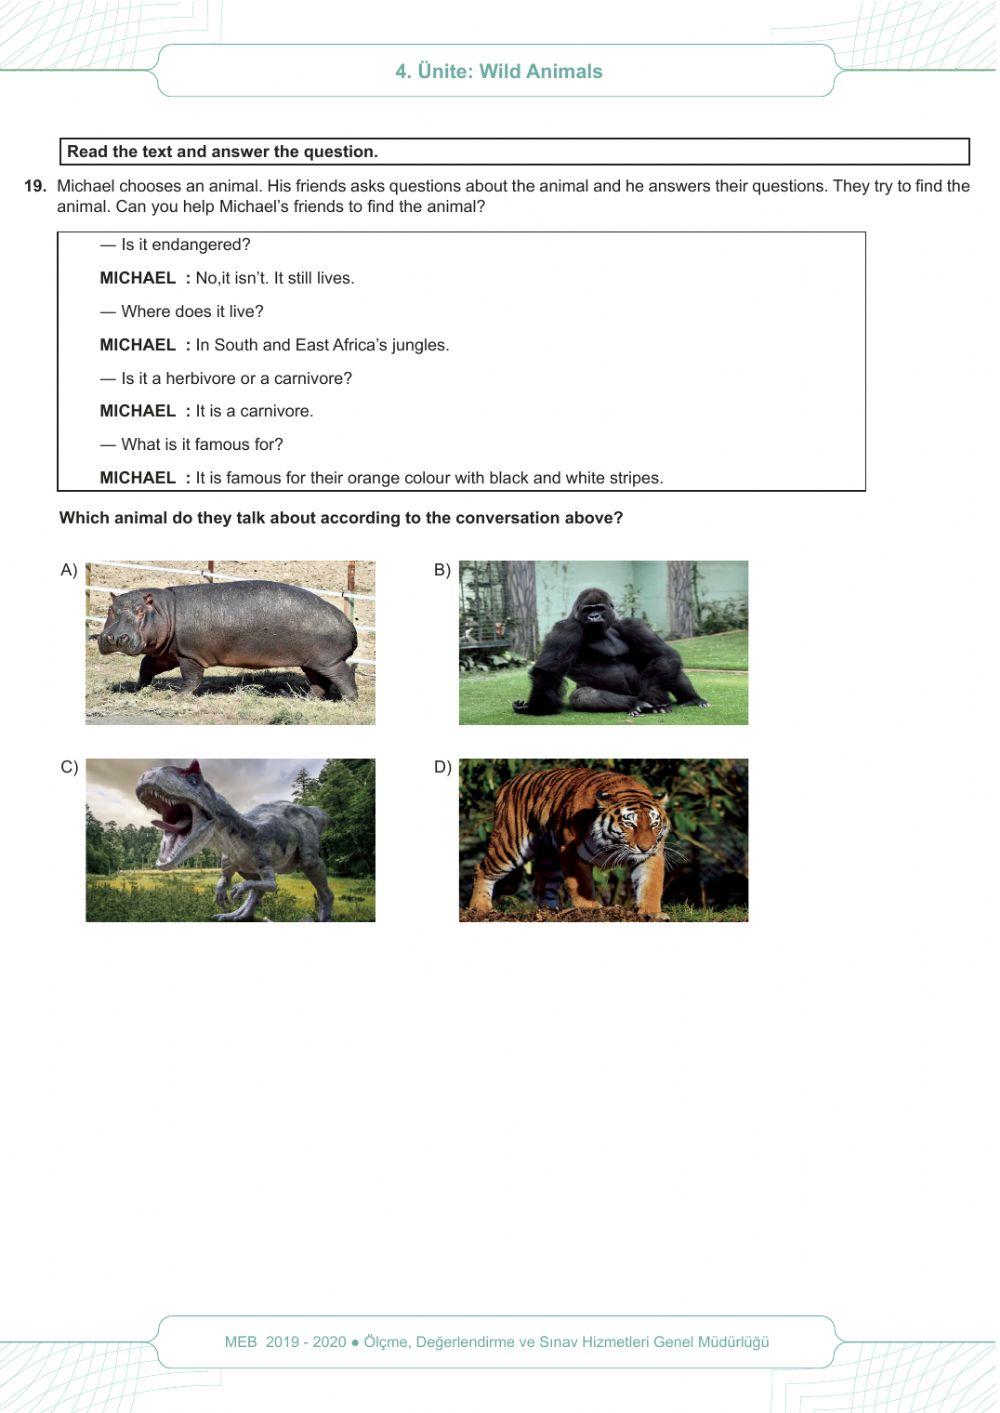 7.4 Wild Animals MEB Skill Based Test part 2